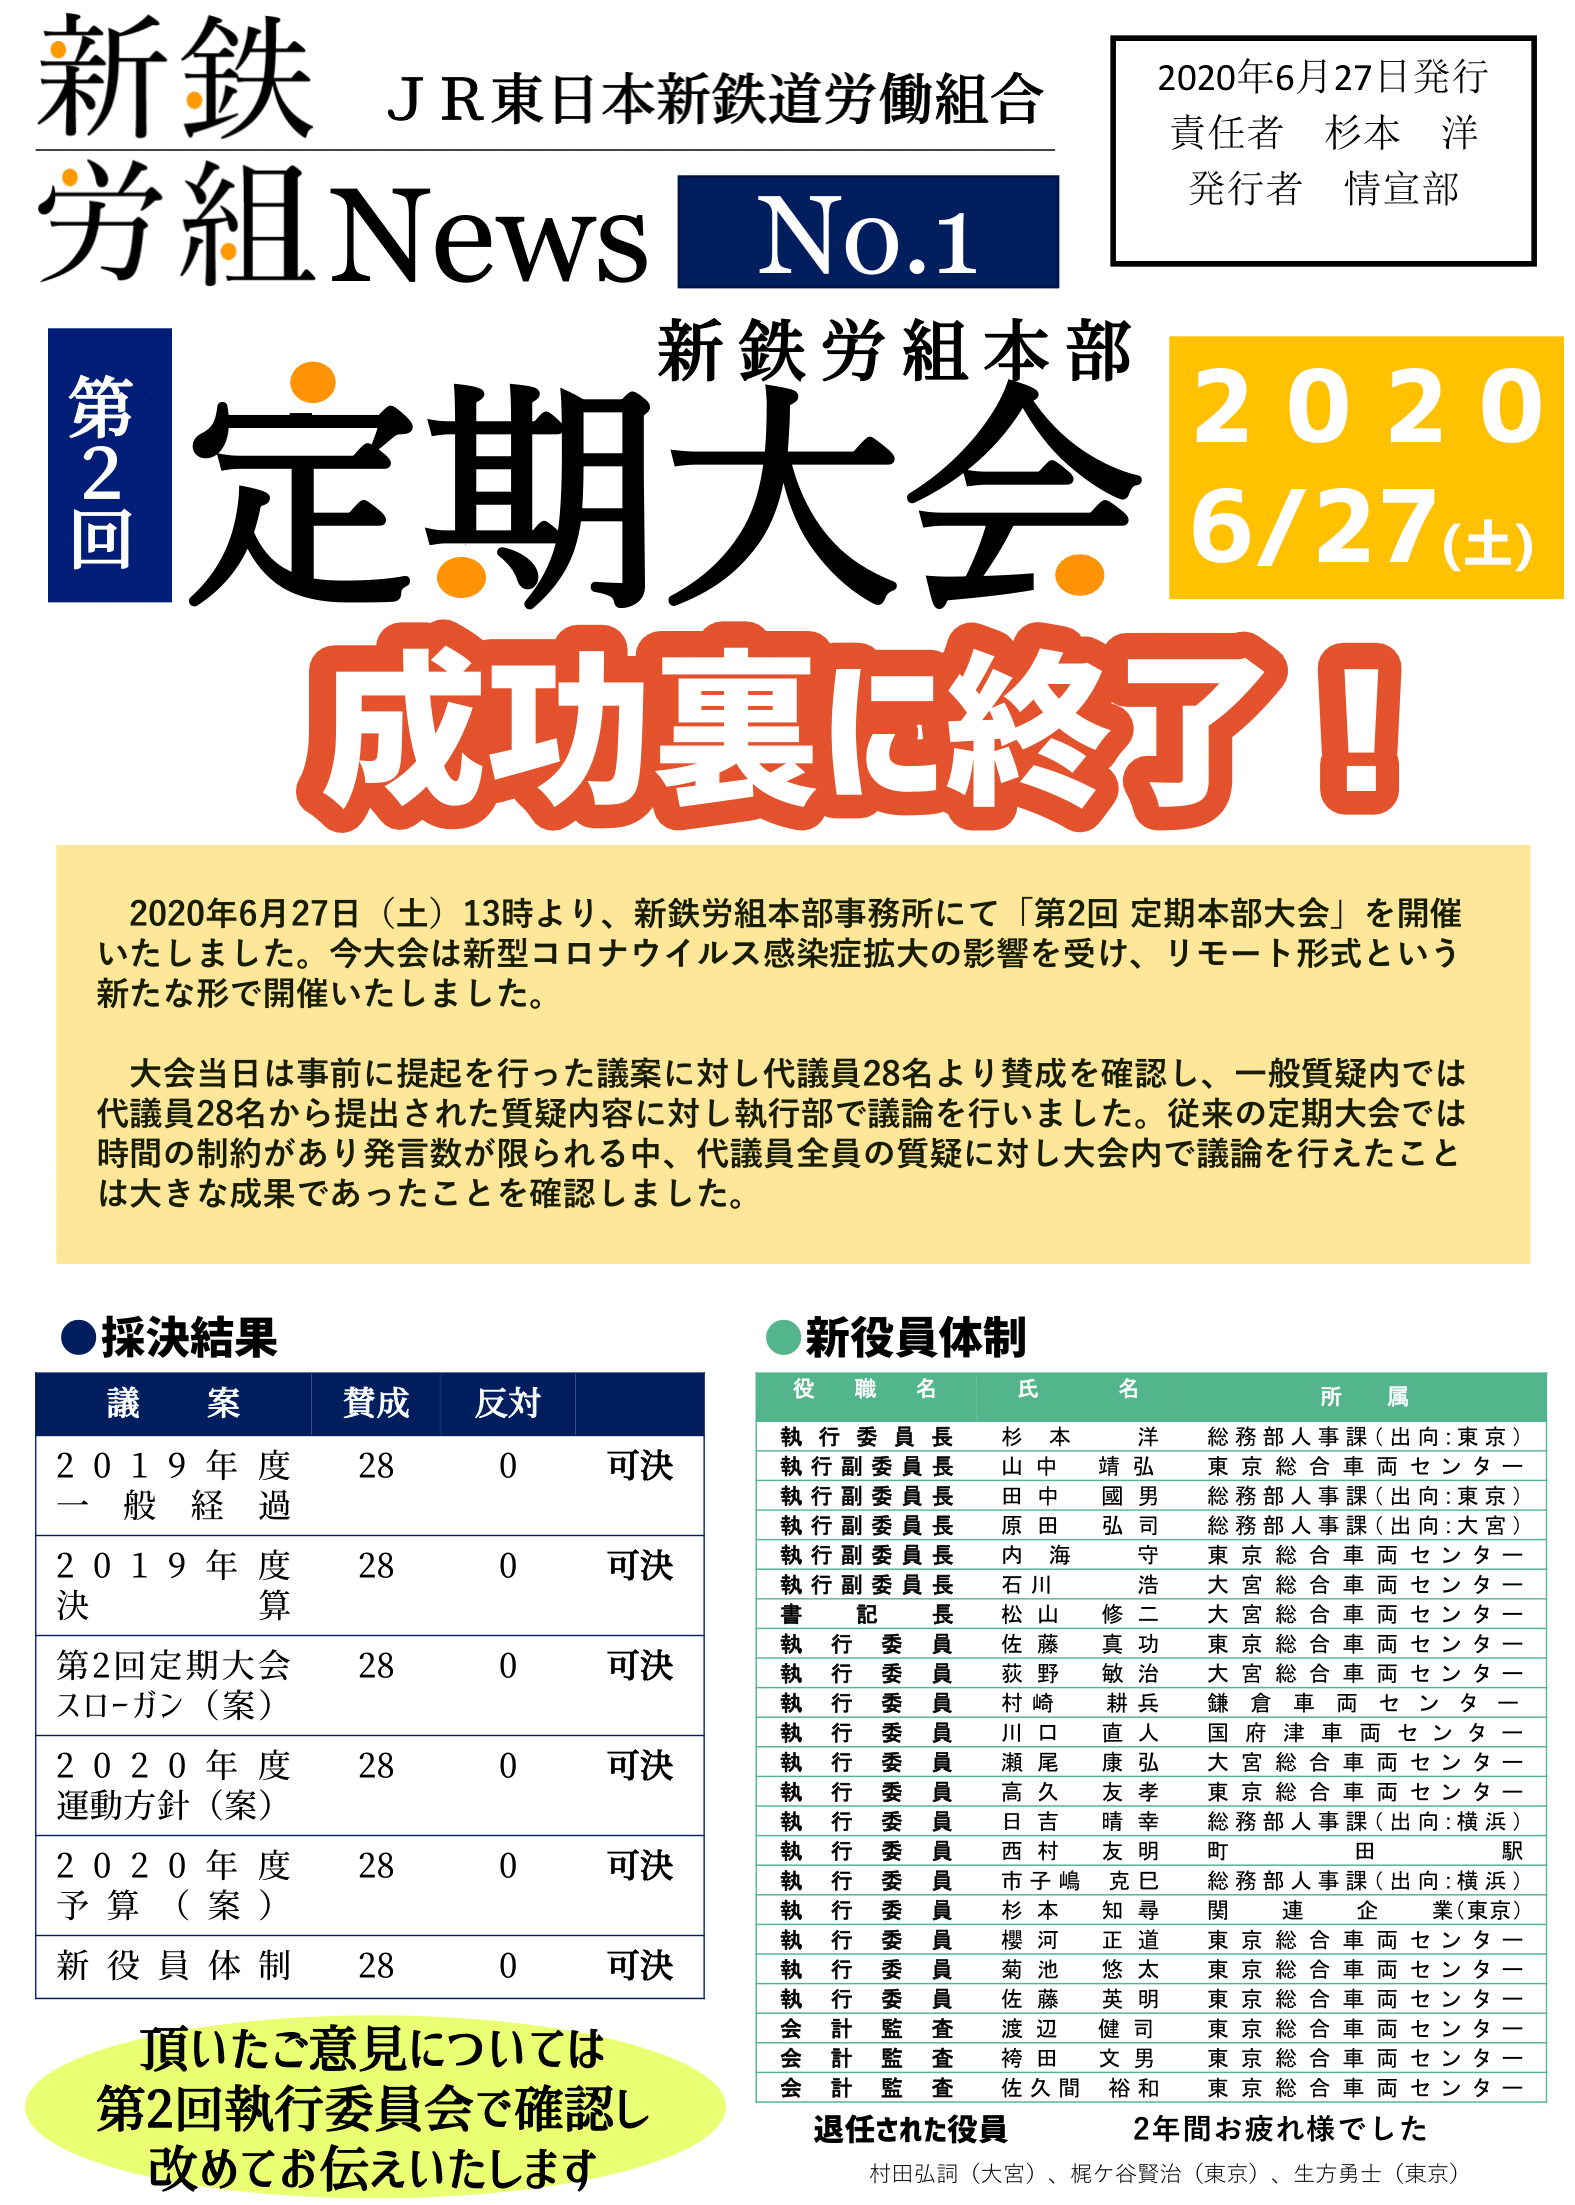 JRENU-NEWS_202006_1-1